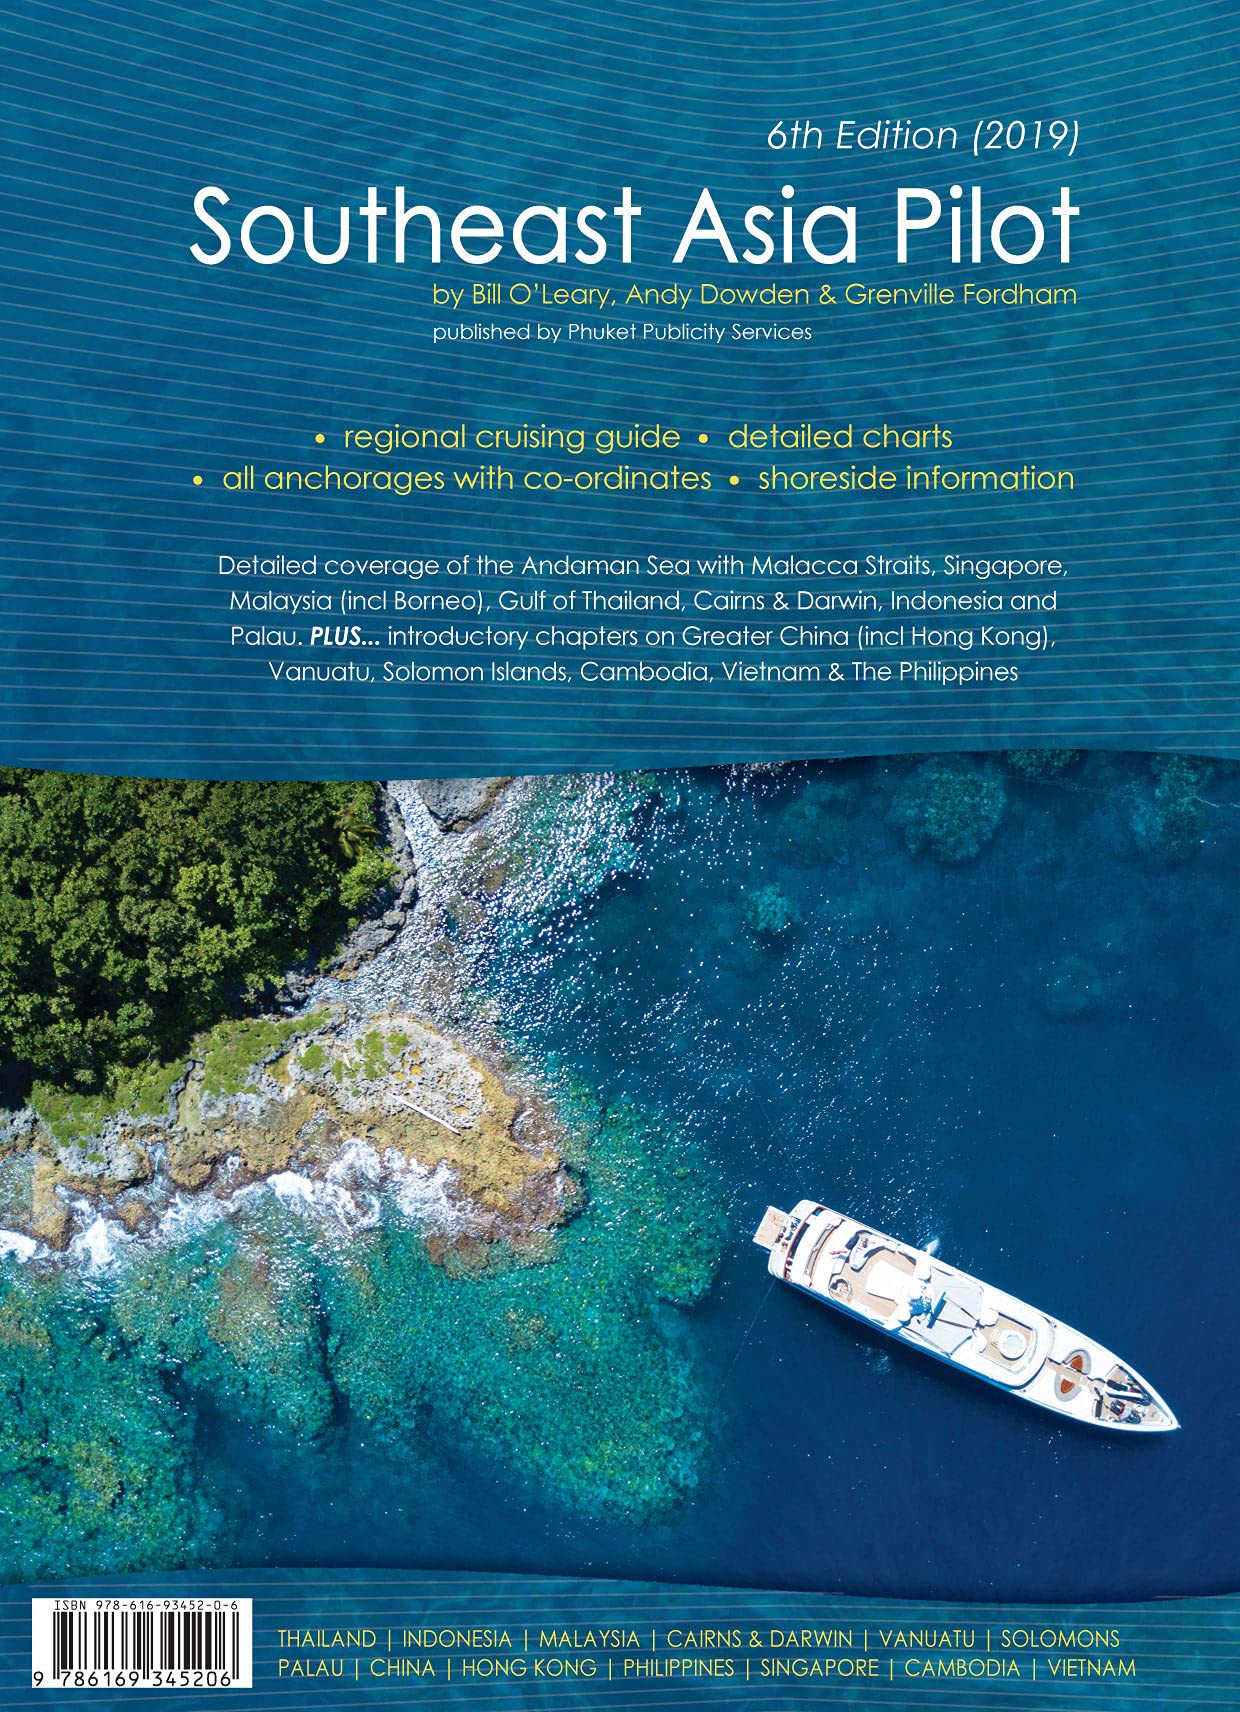 Southeast Asia Pilot (6th Edition)